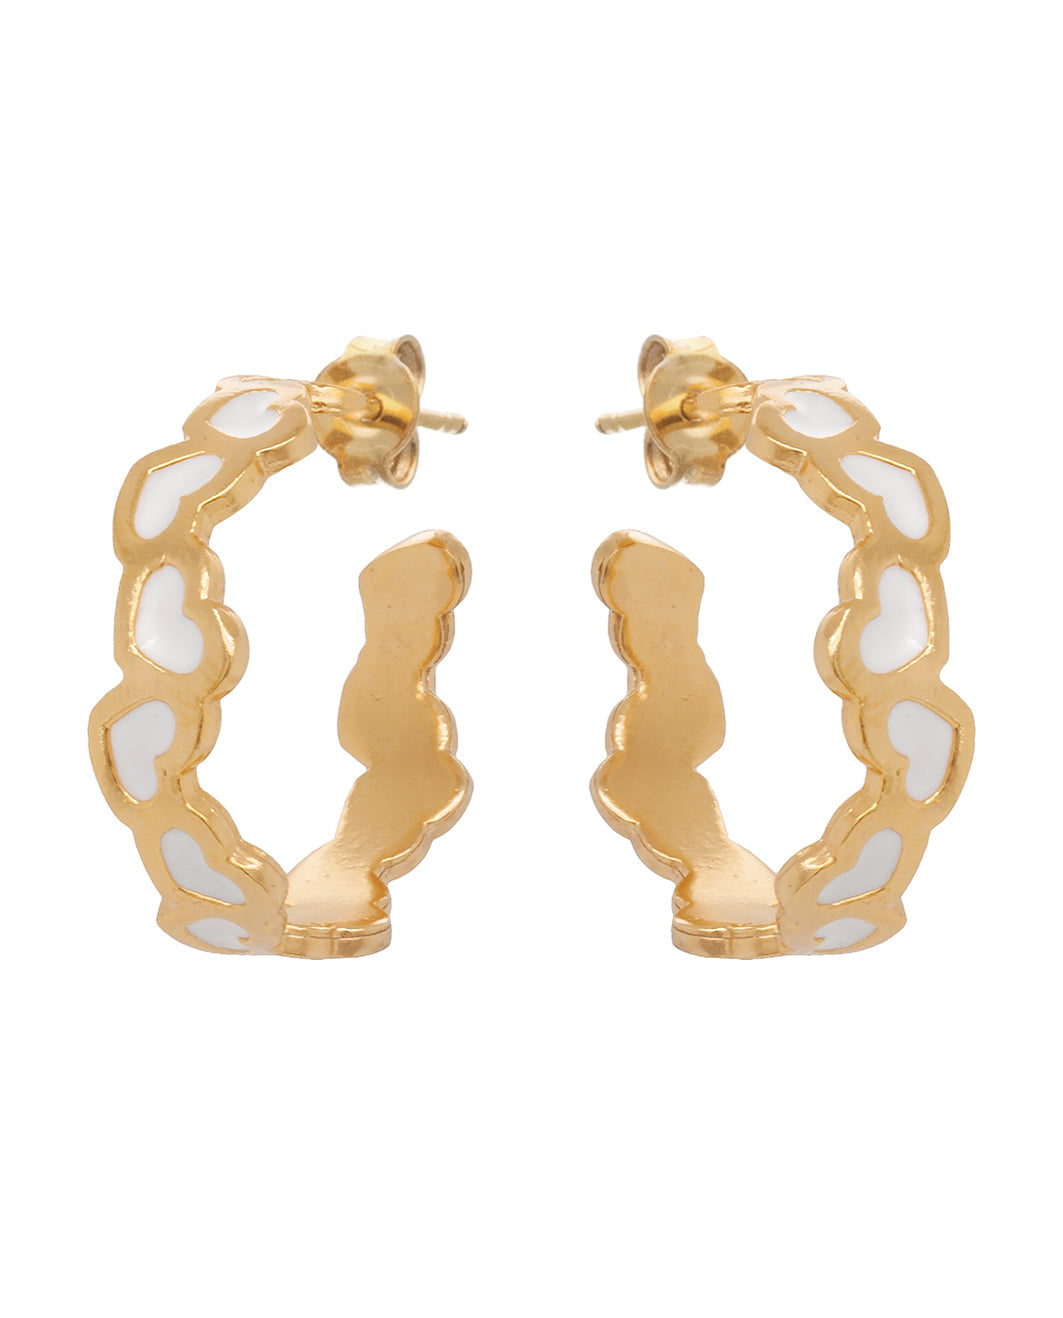 Kardoules earrings